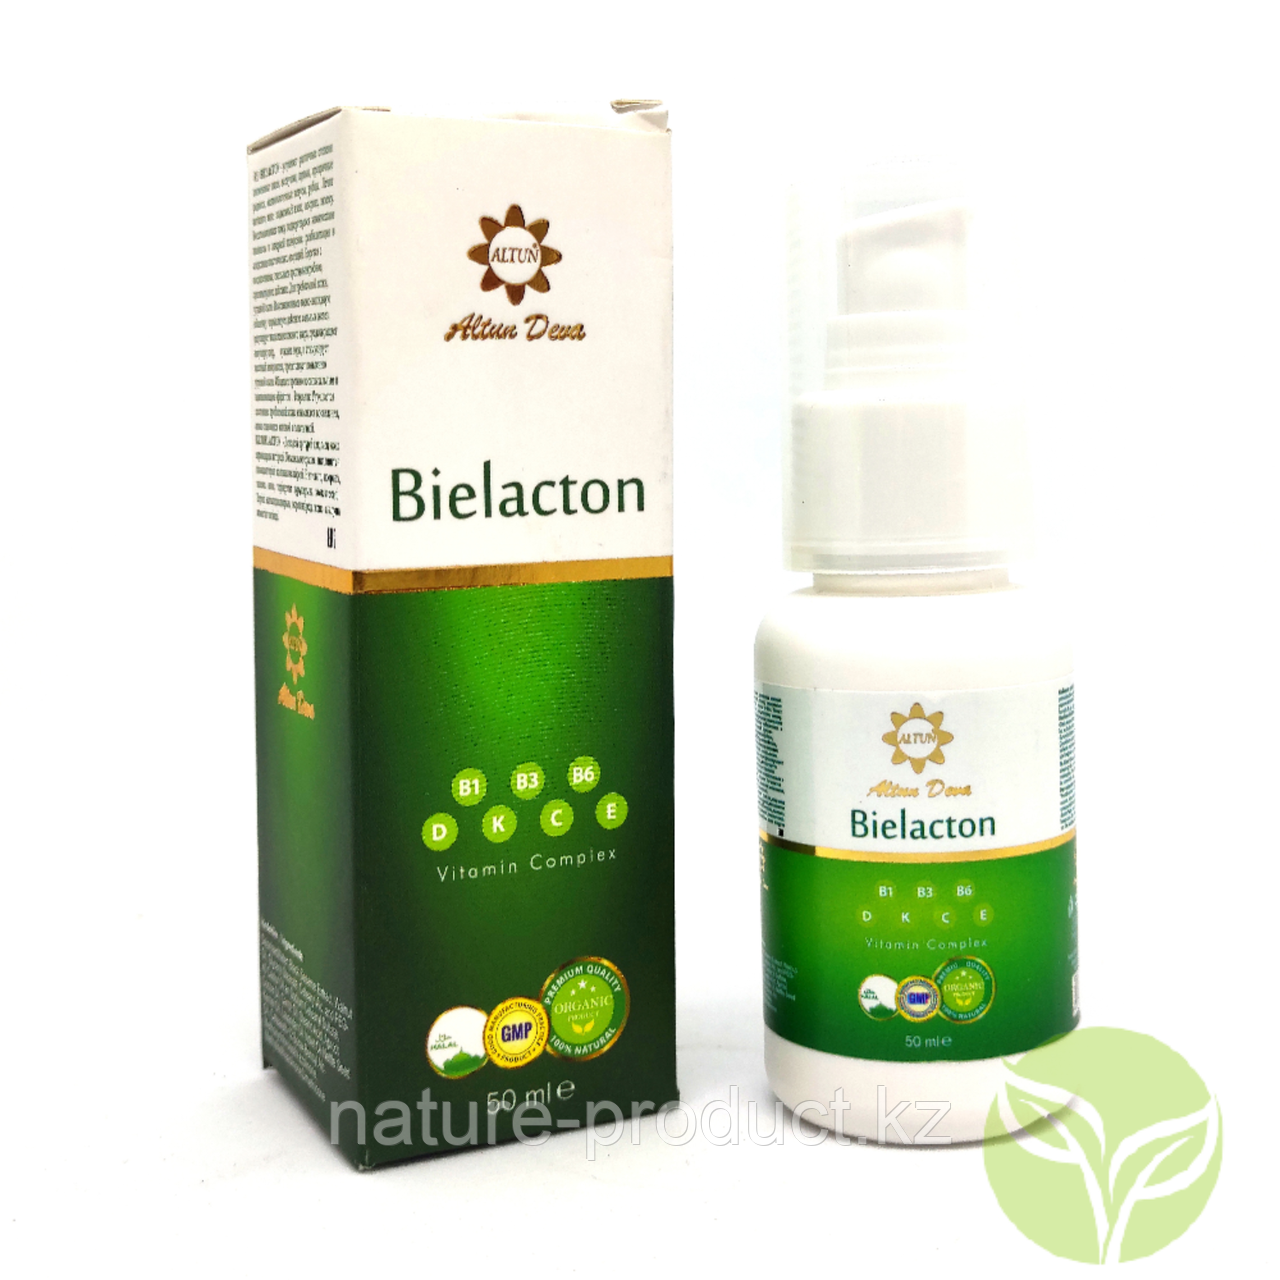 Bielacton Altun Deva Незаменим для Вашей кожи. 50 мл